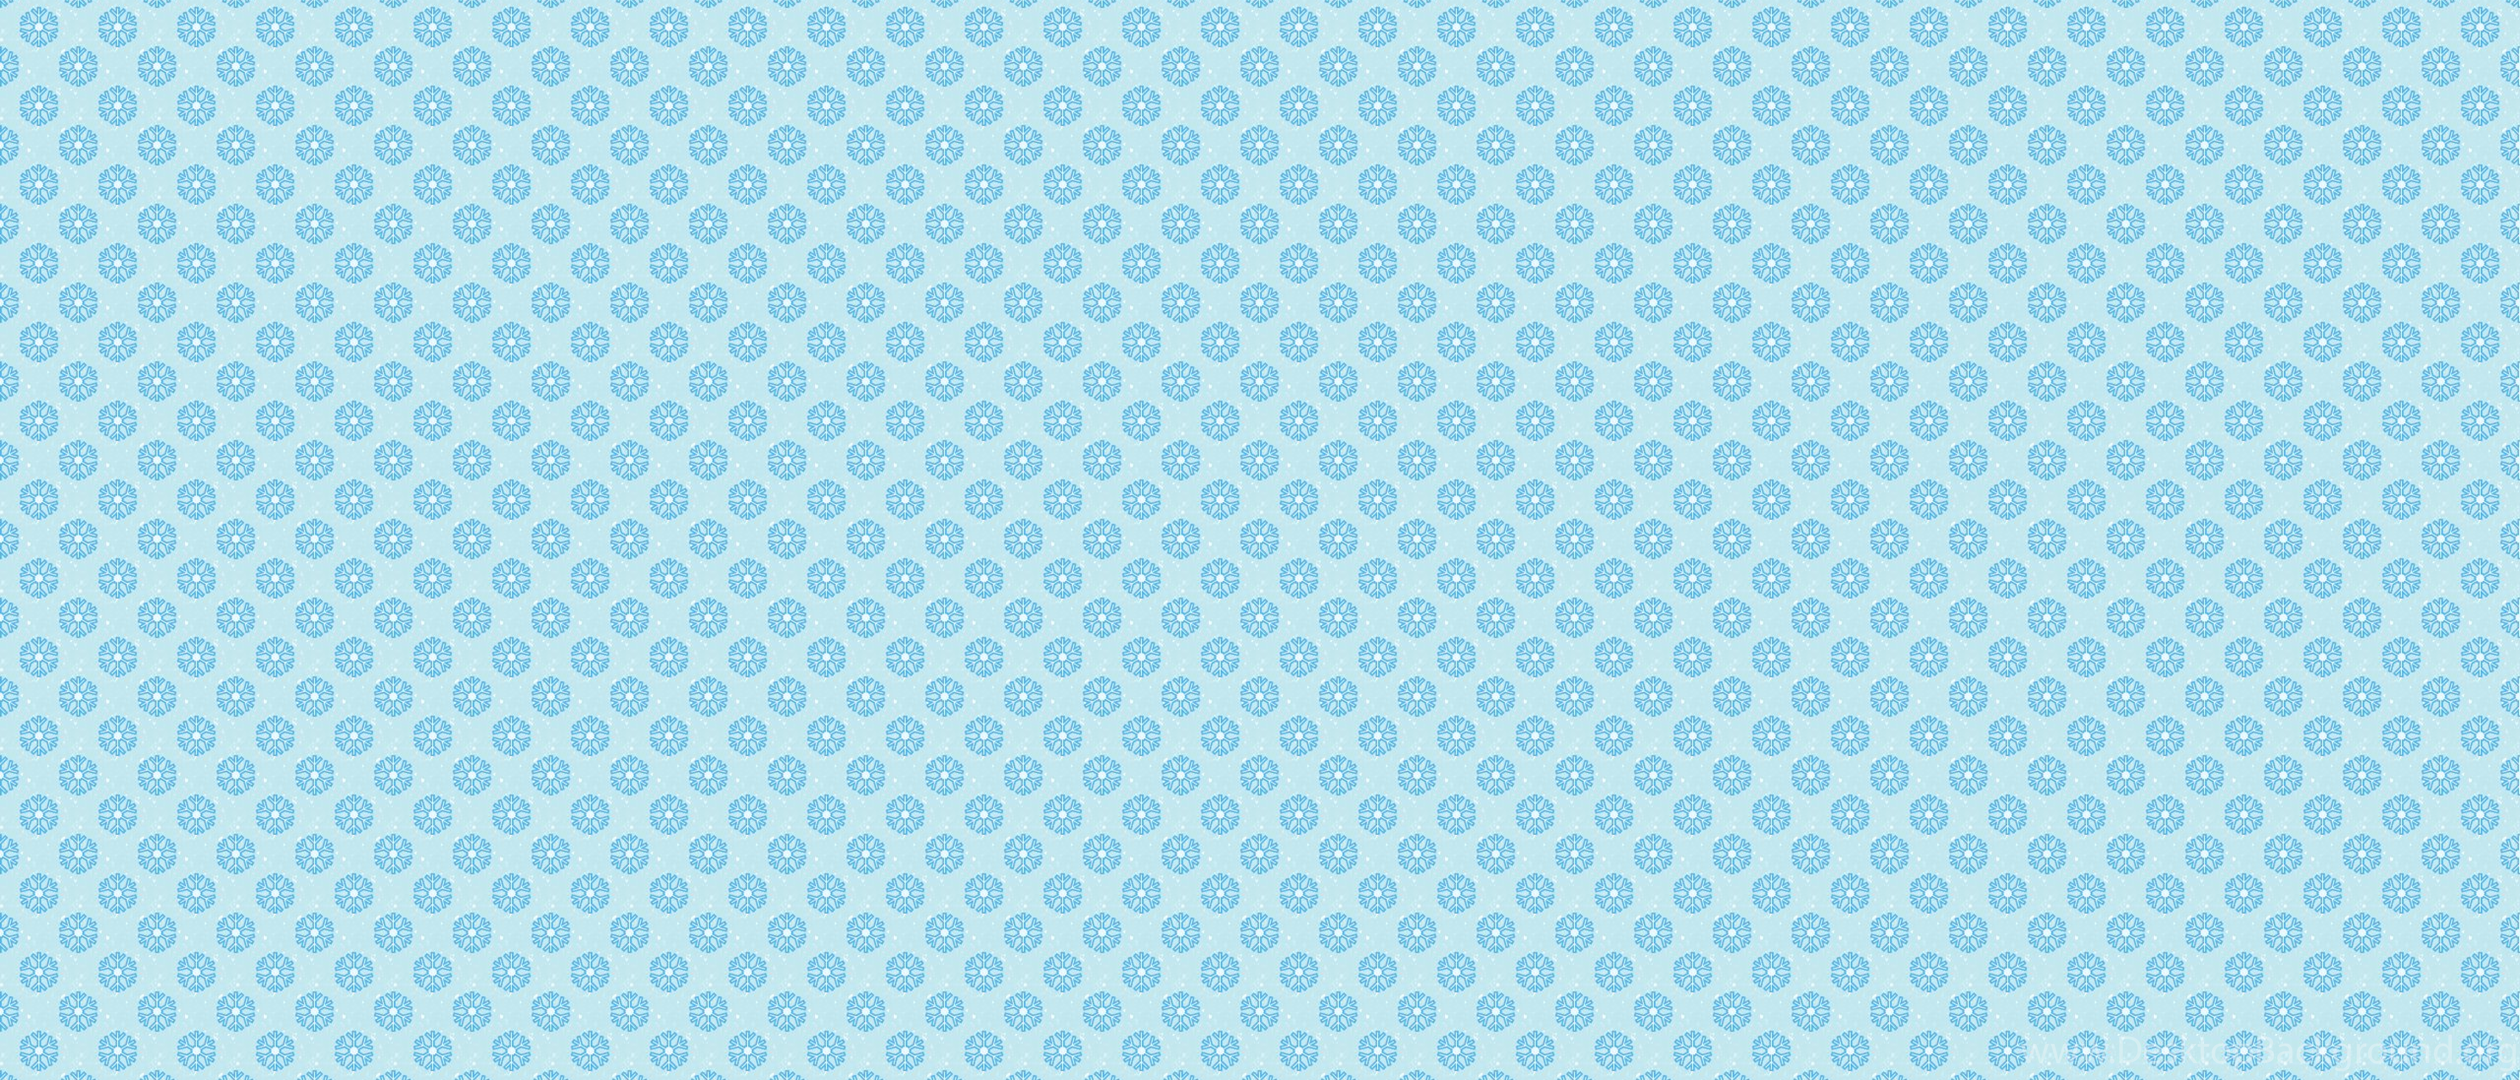 Jestingstock.com Cute Blue Wallpaper Tumblr Desktop Background